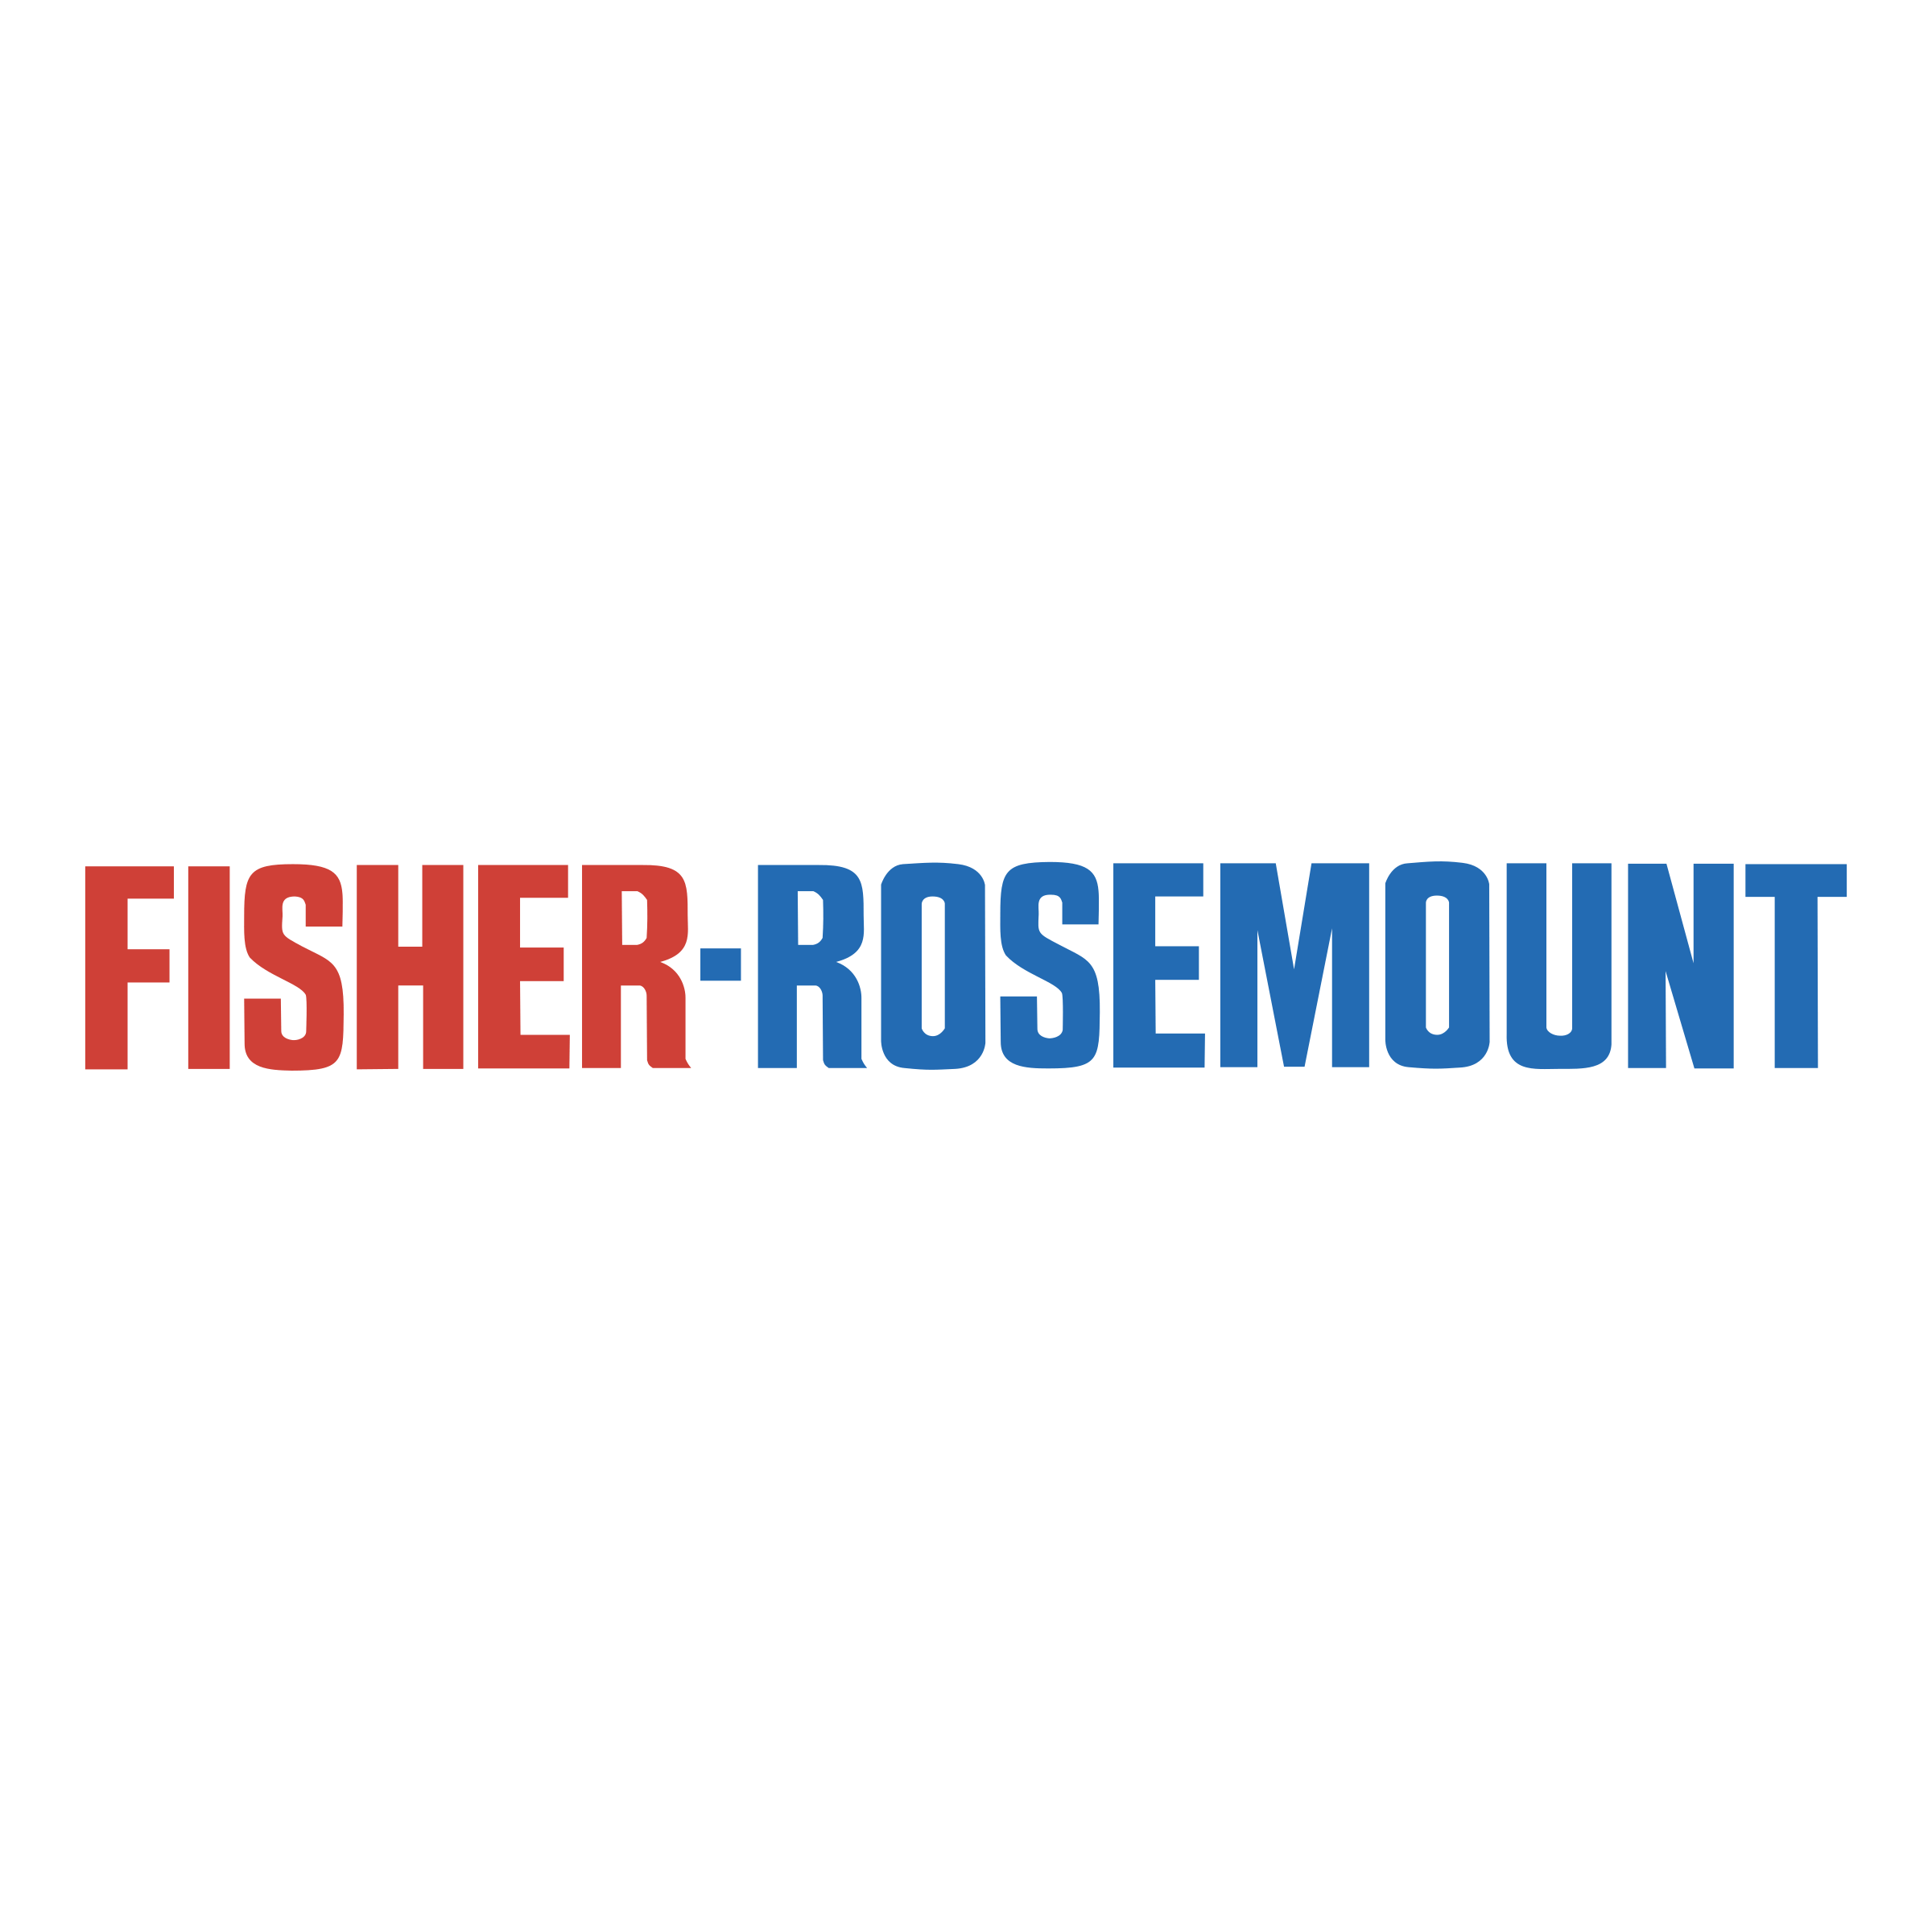 Rosemount Logo - Fisher Rosemount Logo PNG Transparent & SVG Vector